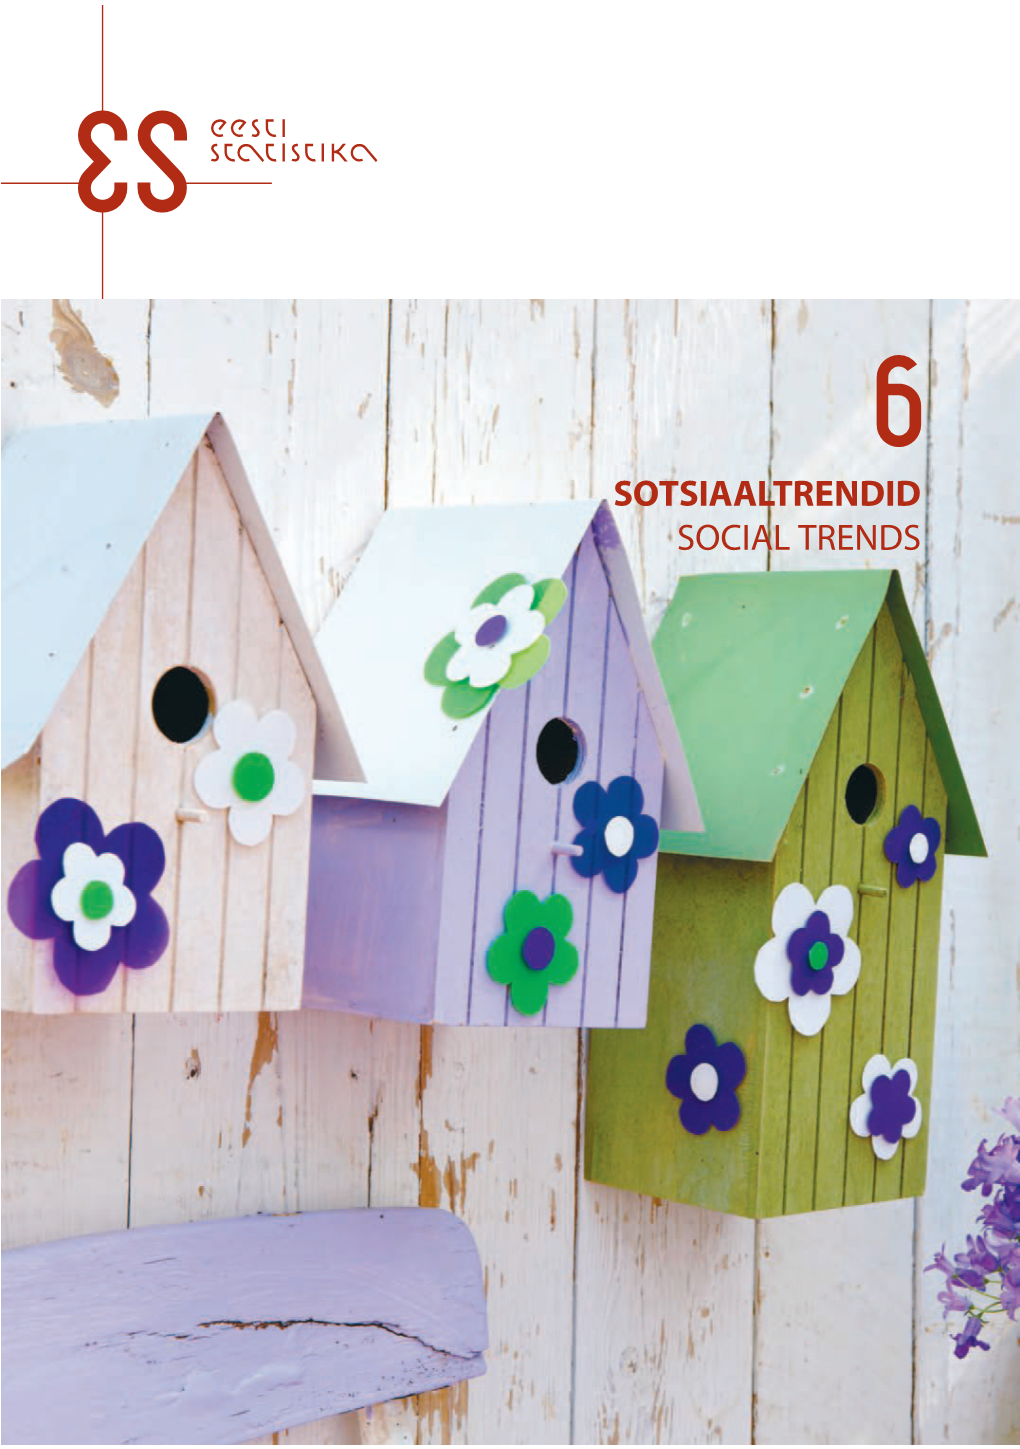 Sotsiaaltrendid Social Trends Eesti Statistika Statistics Estonia